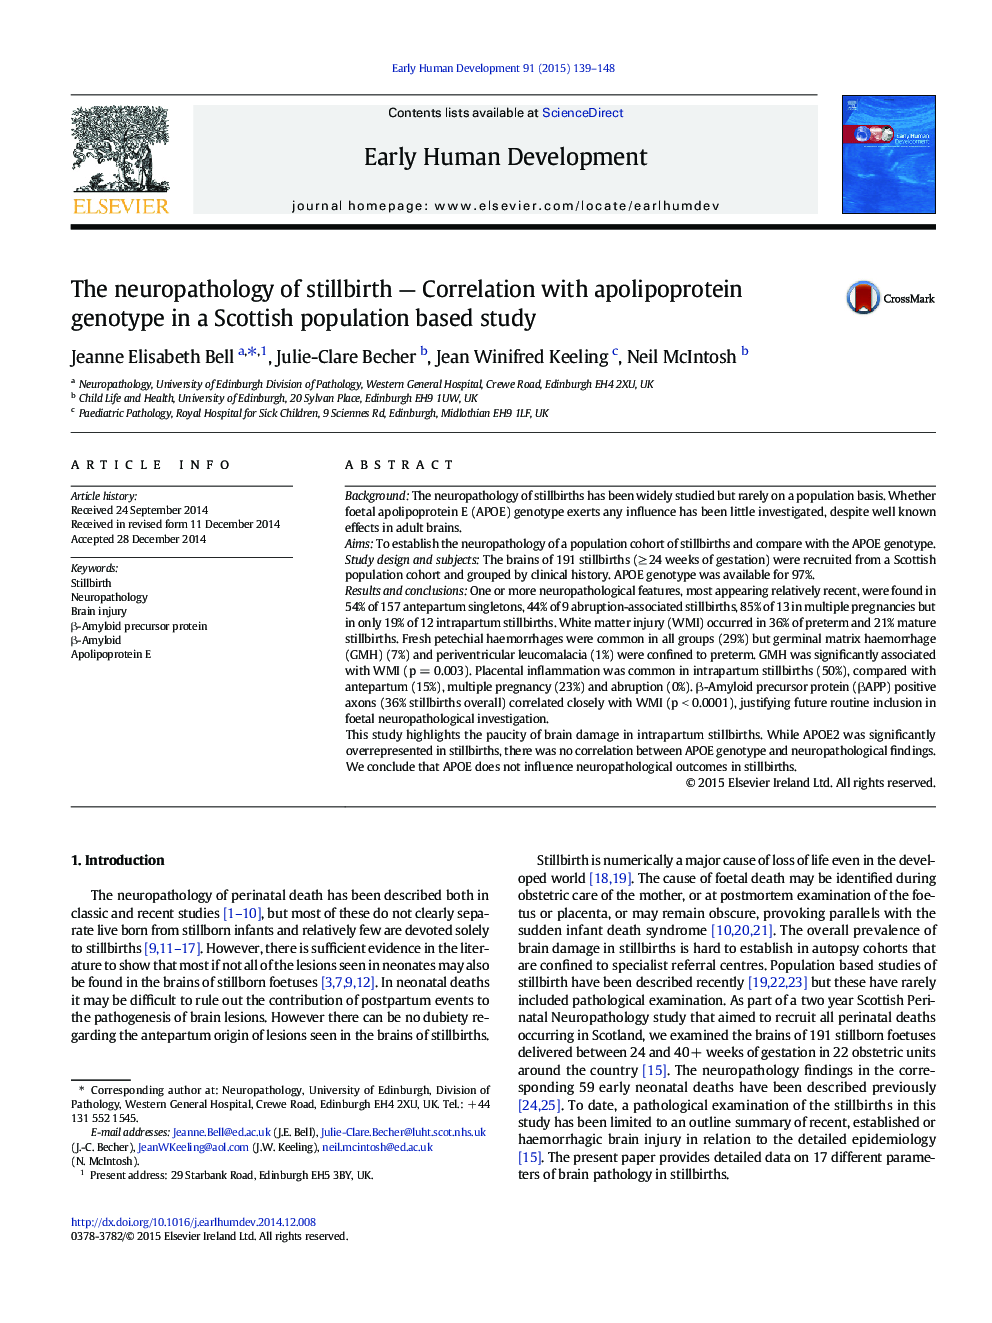 The neuropathology of stillbirth — Correlation with apolipoprotein genotype in a Scottish population based study